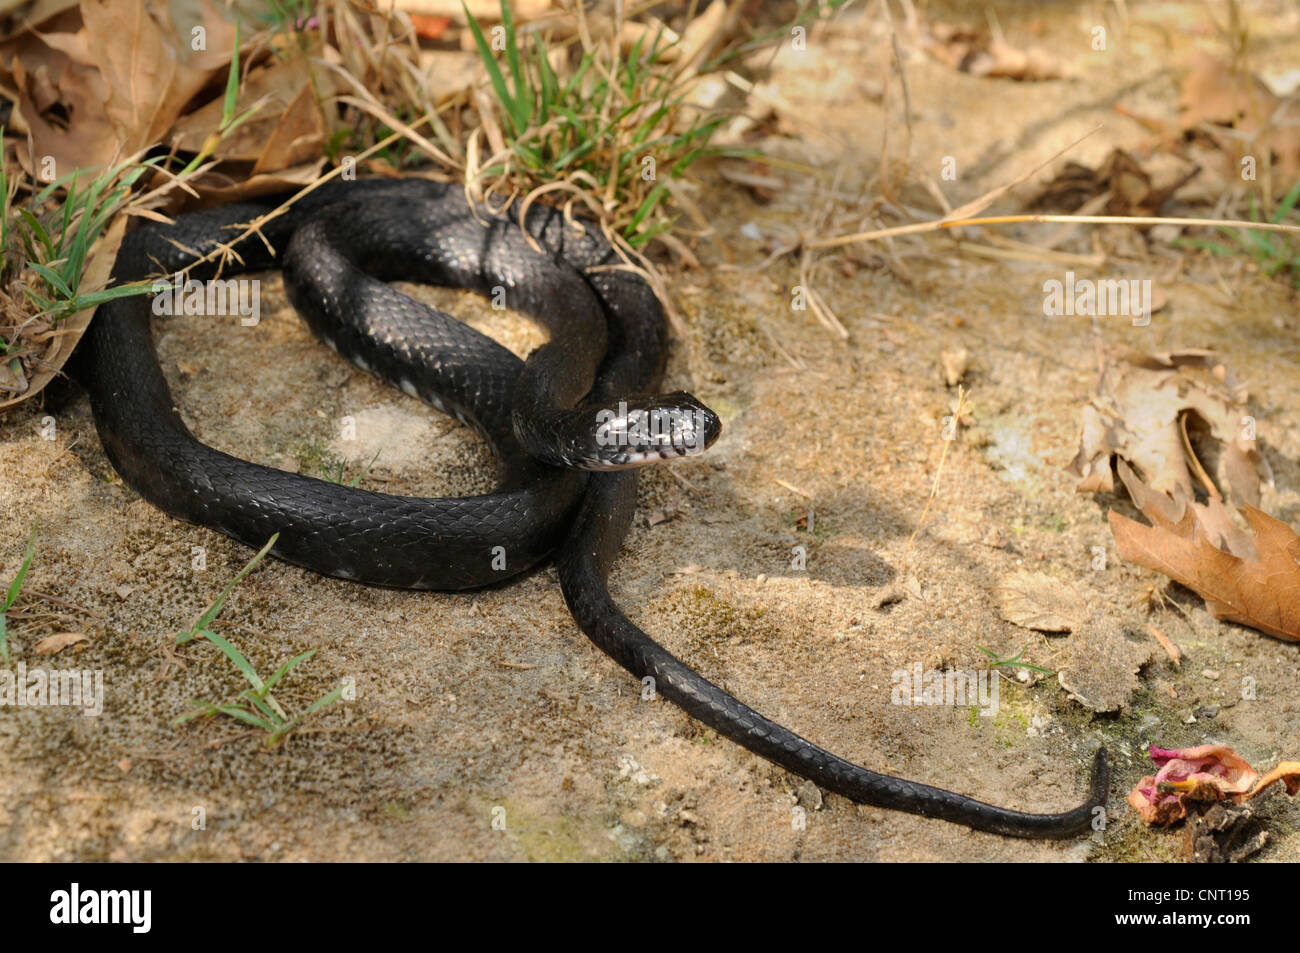 dice snake (Natrix tessellata), black dice snake, melanism, Greece, Creta, Kournas See Stock Photo